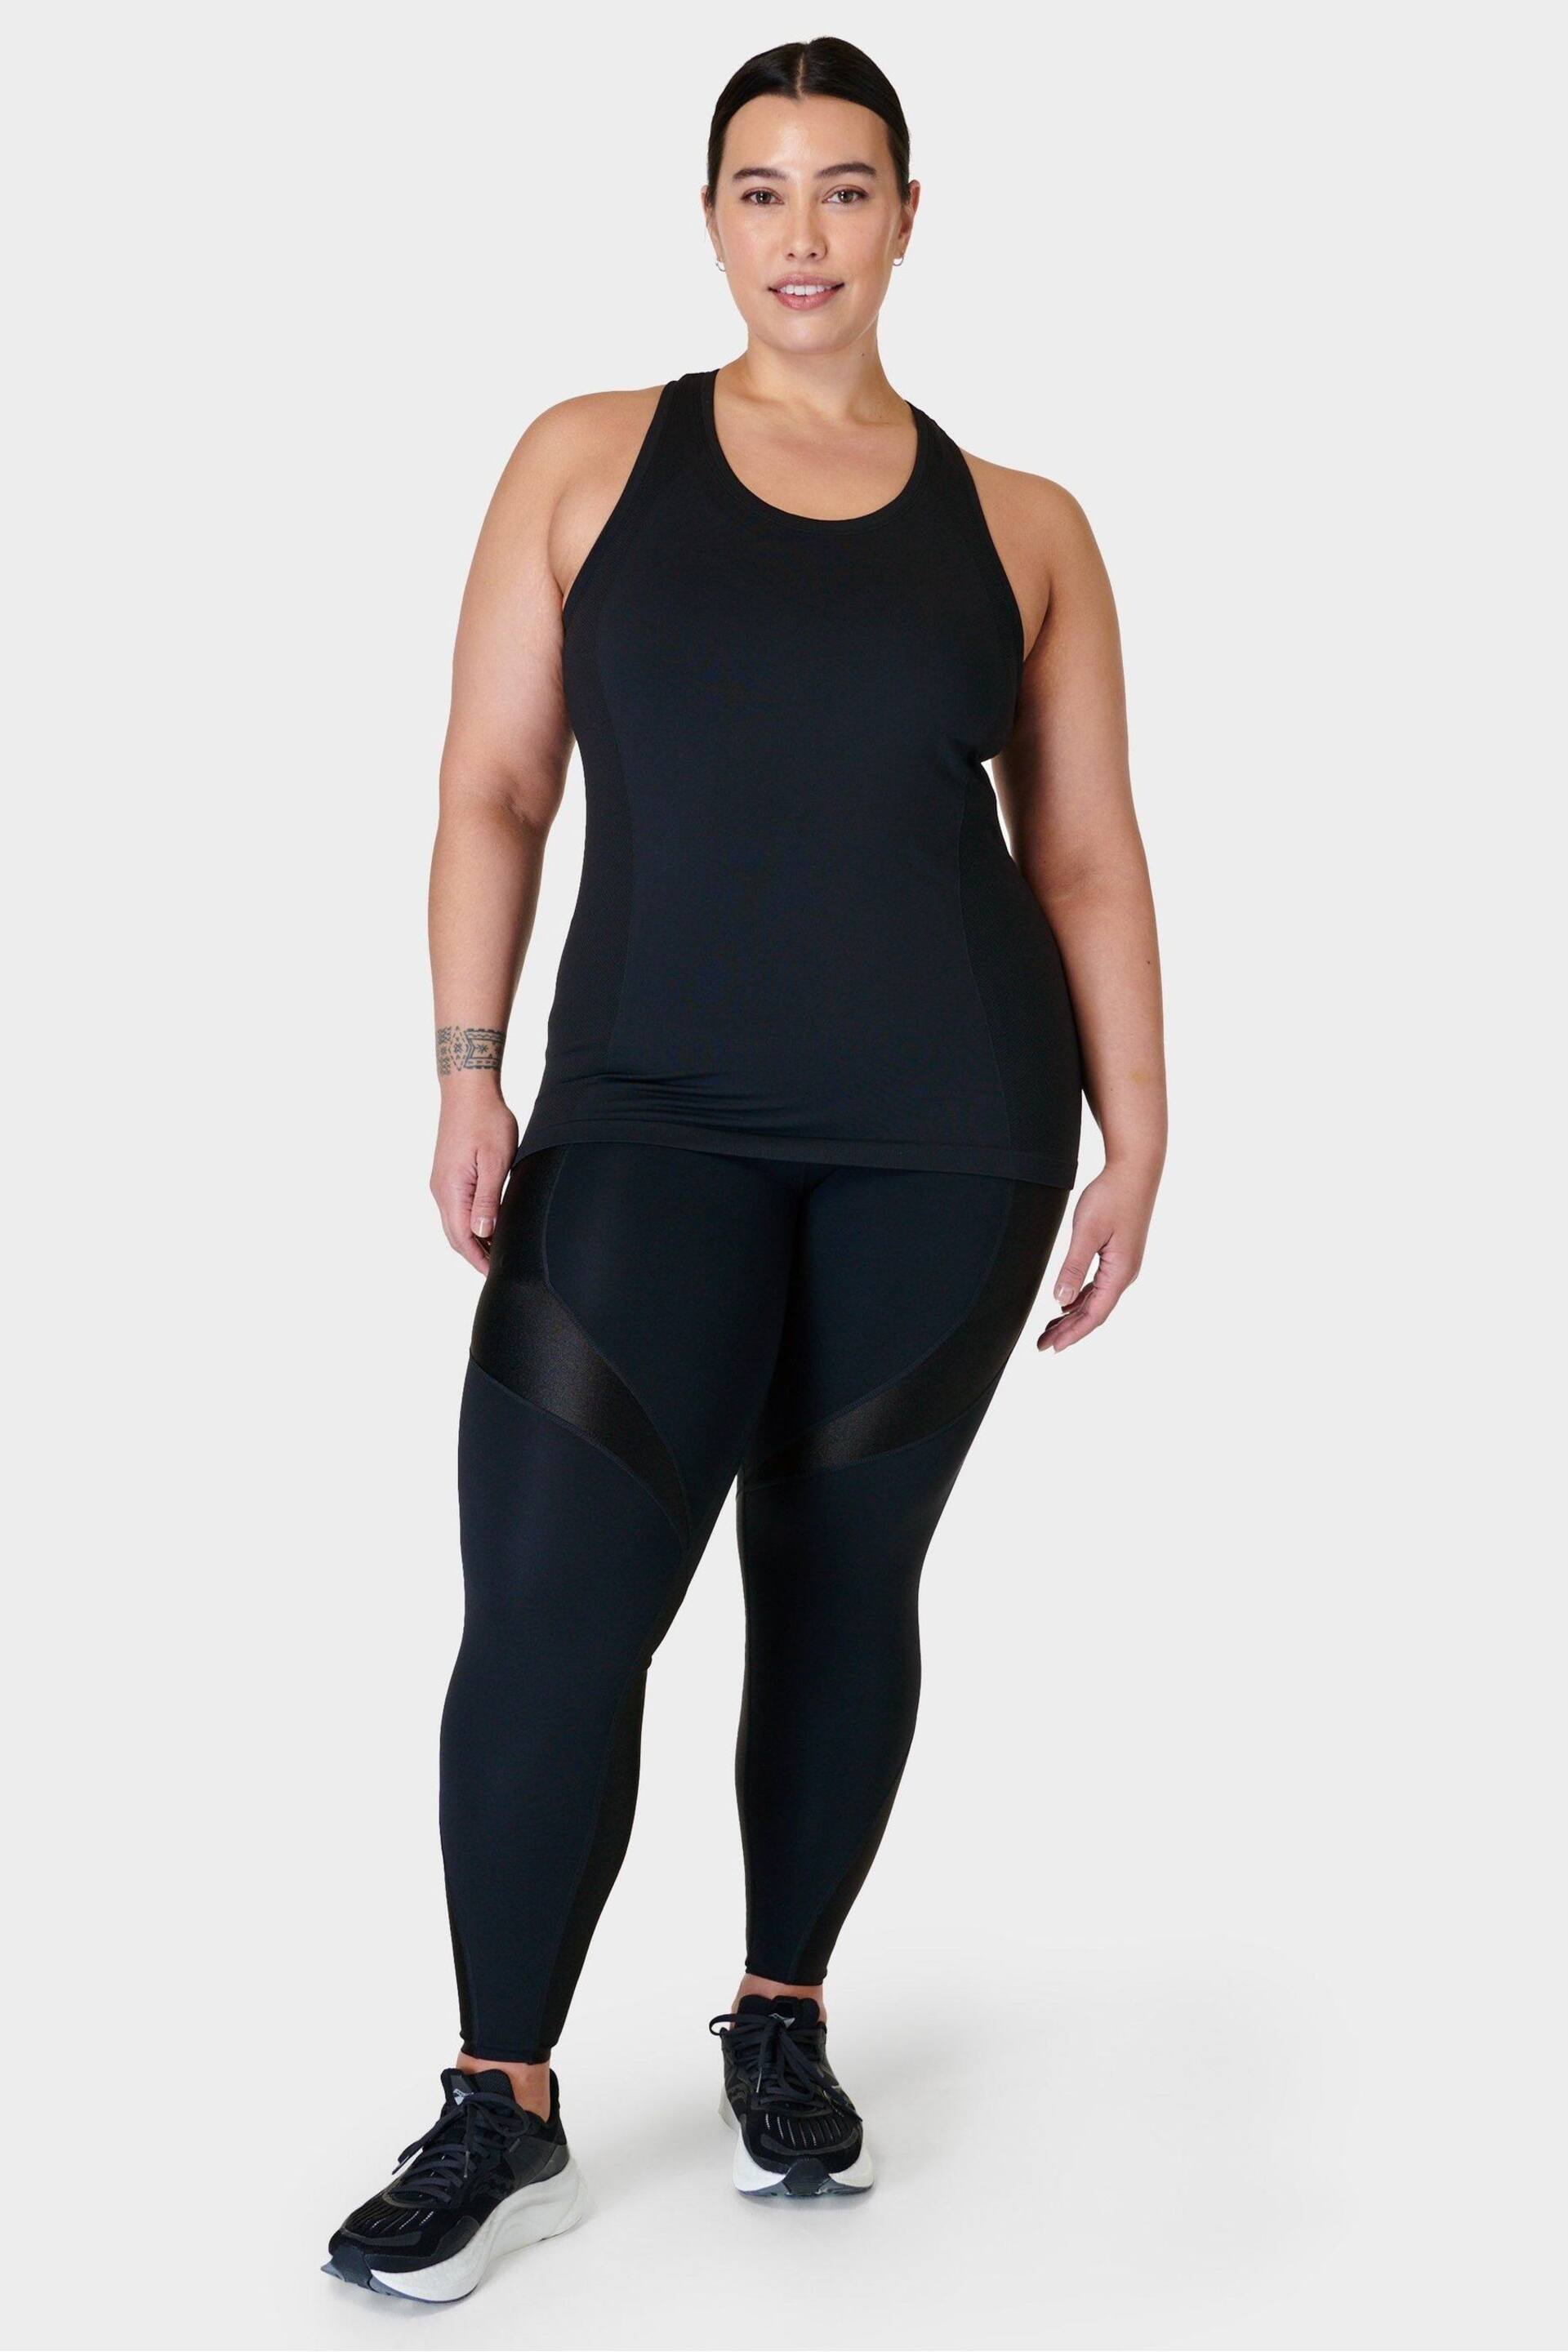 Sweaty Betty Black Athlete Seamless Workout Tank Top - Image 4 of 8